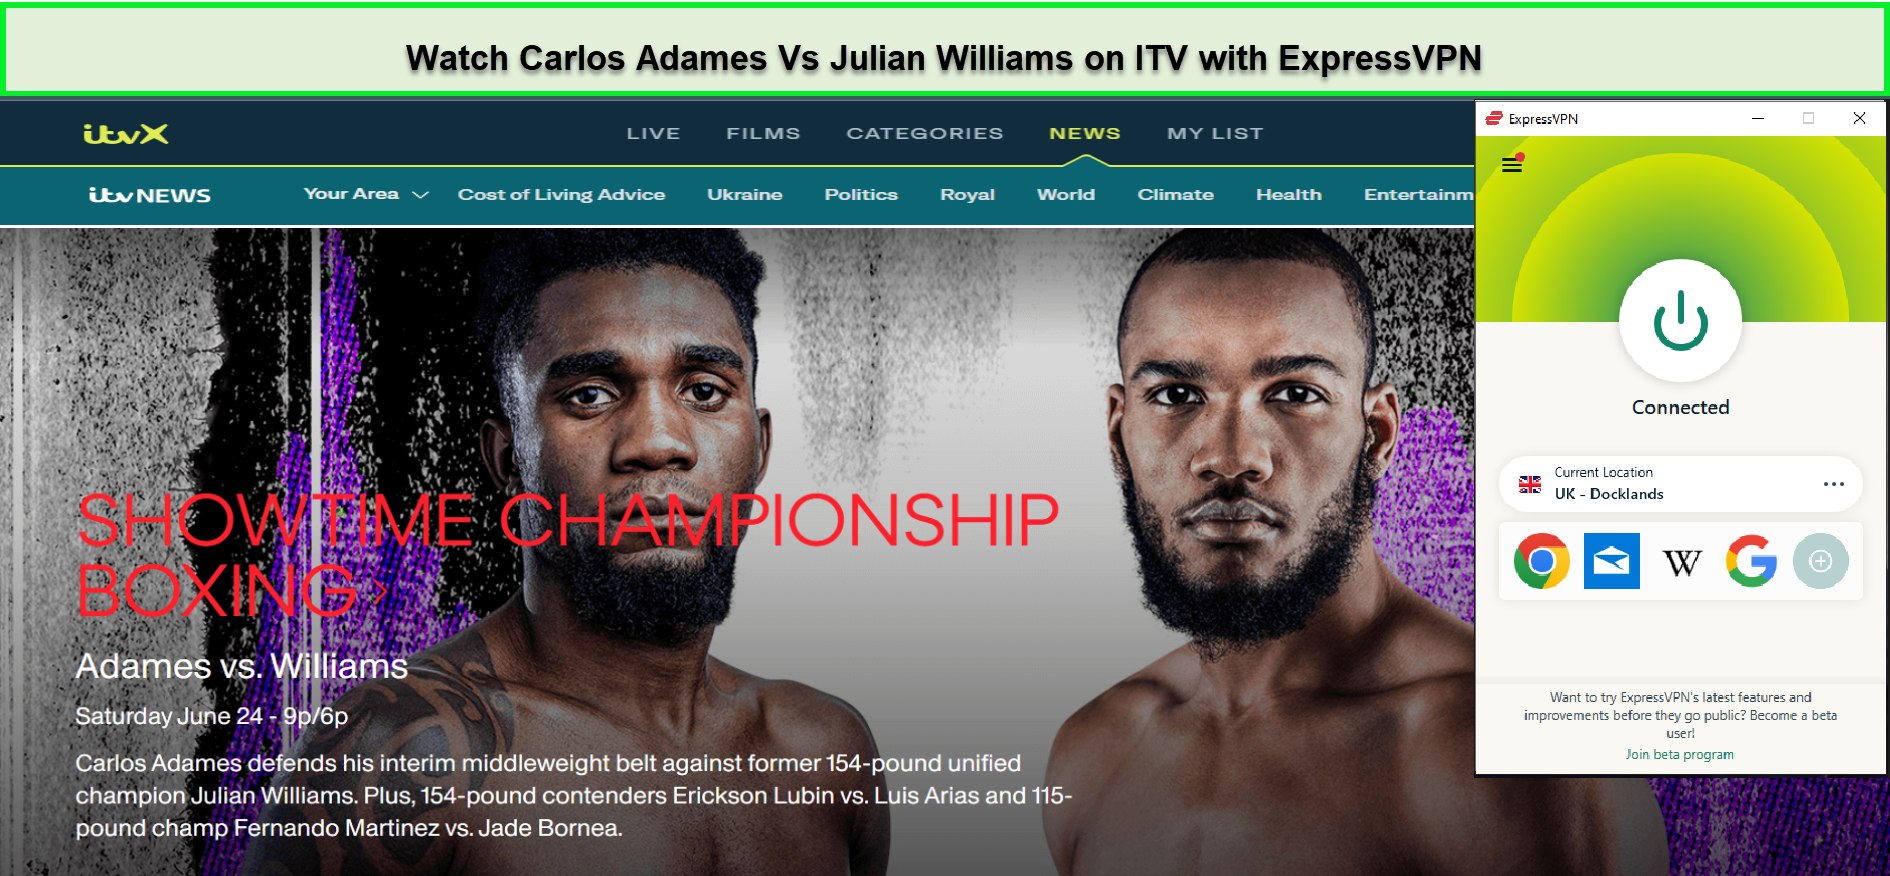 Watch-Carlos-Adames-Vs-Julian-Williams-in-India-on-ITV-with-ExpressVPN